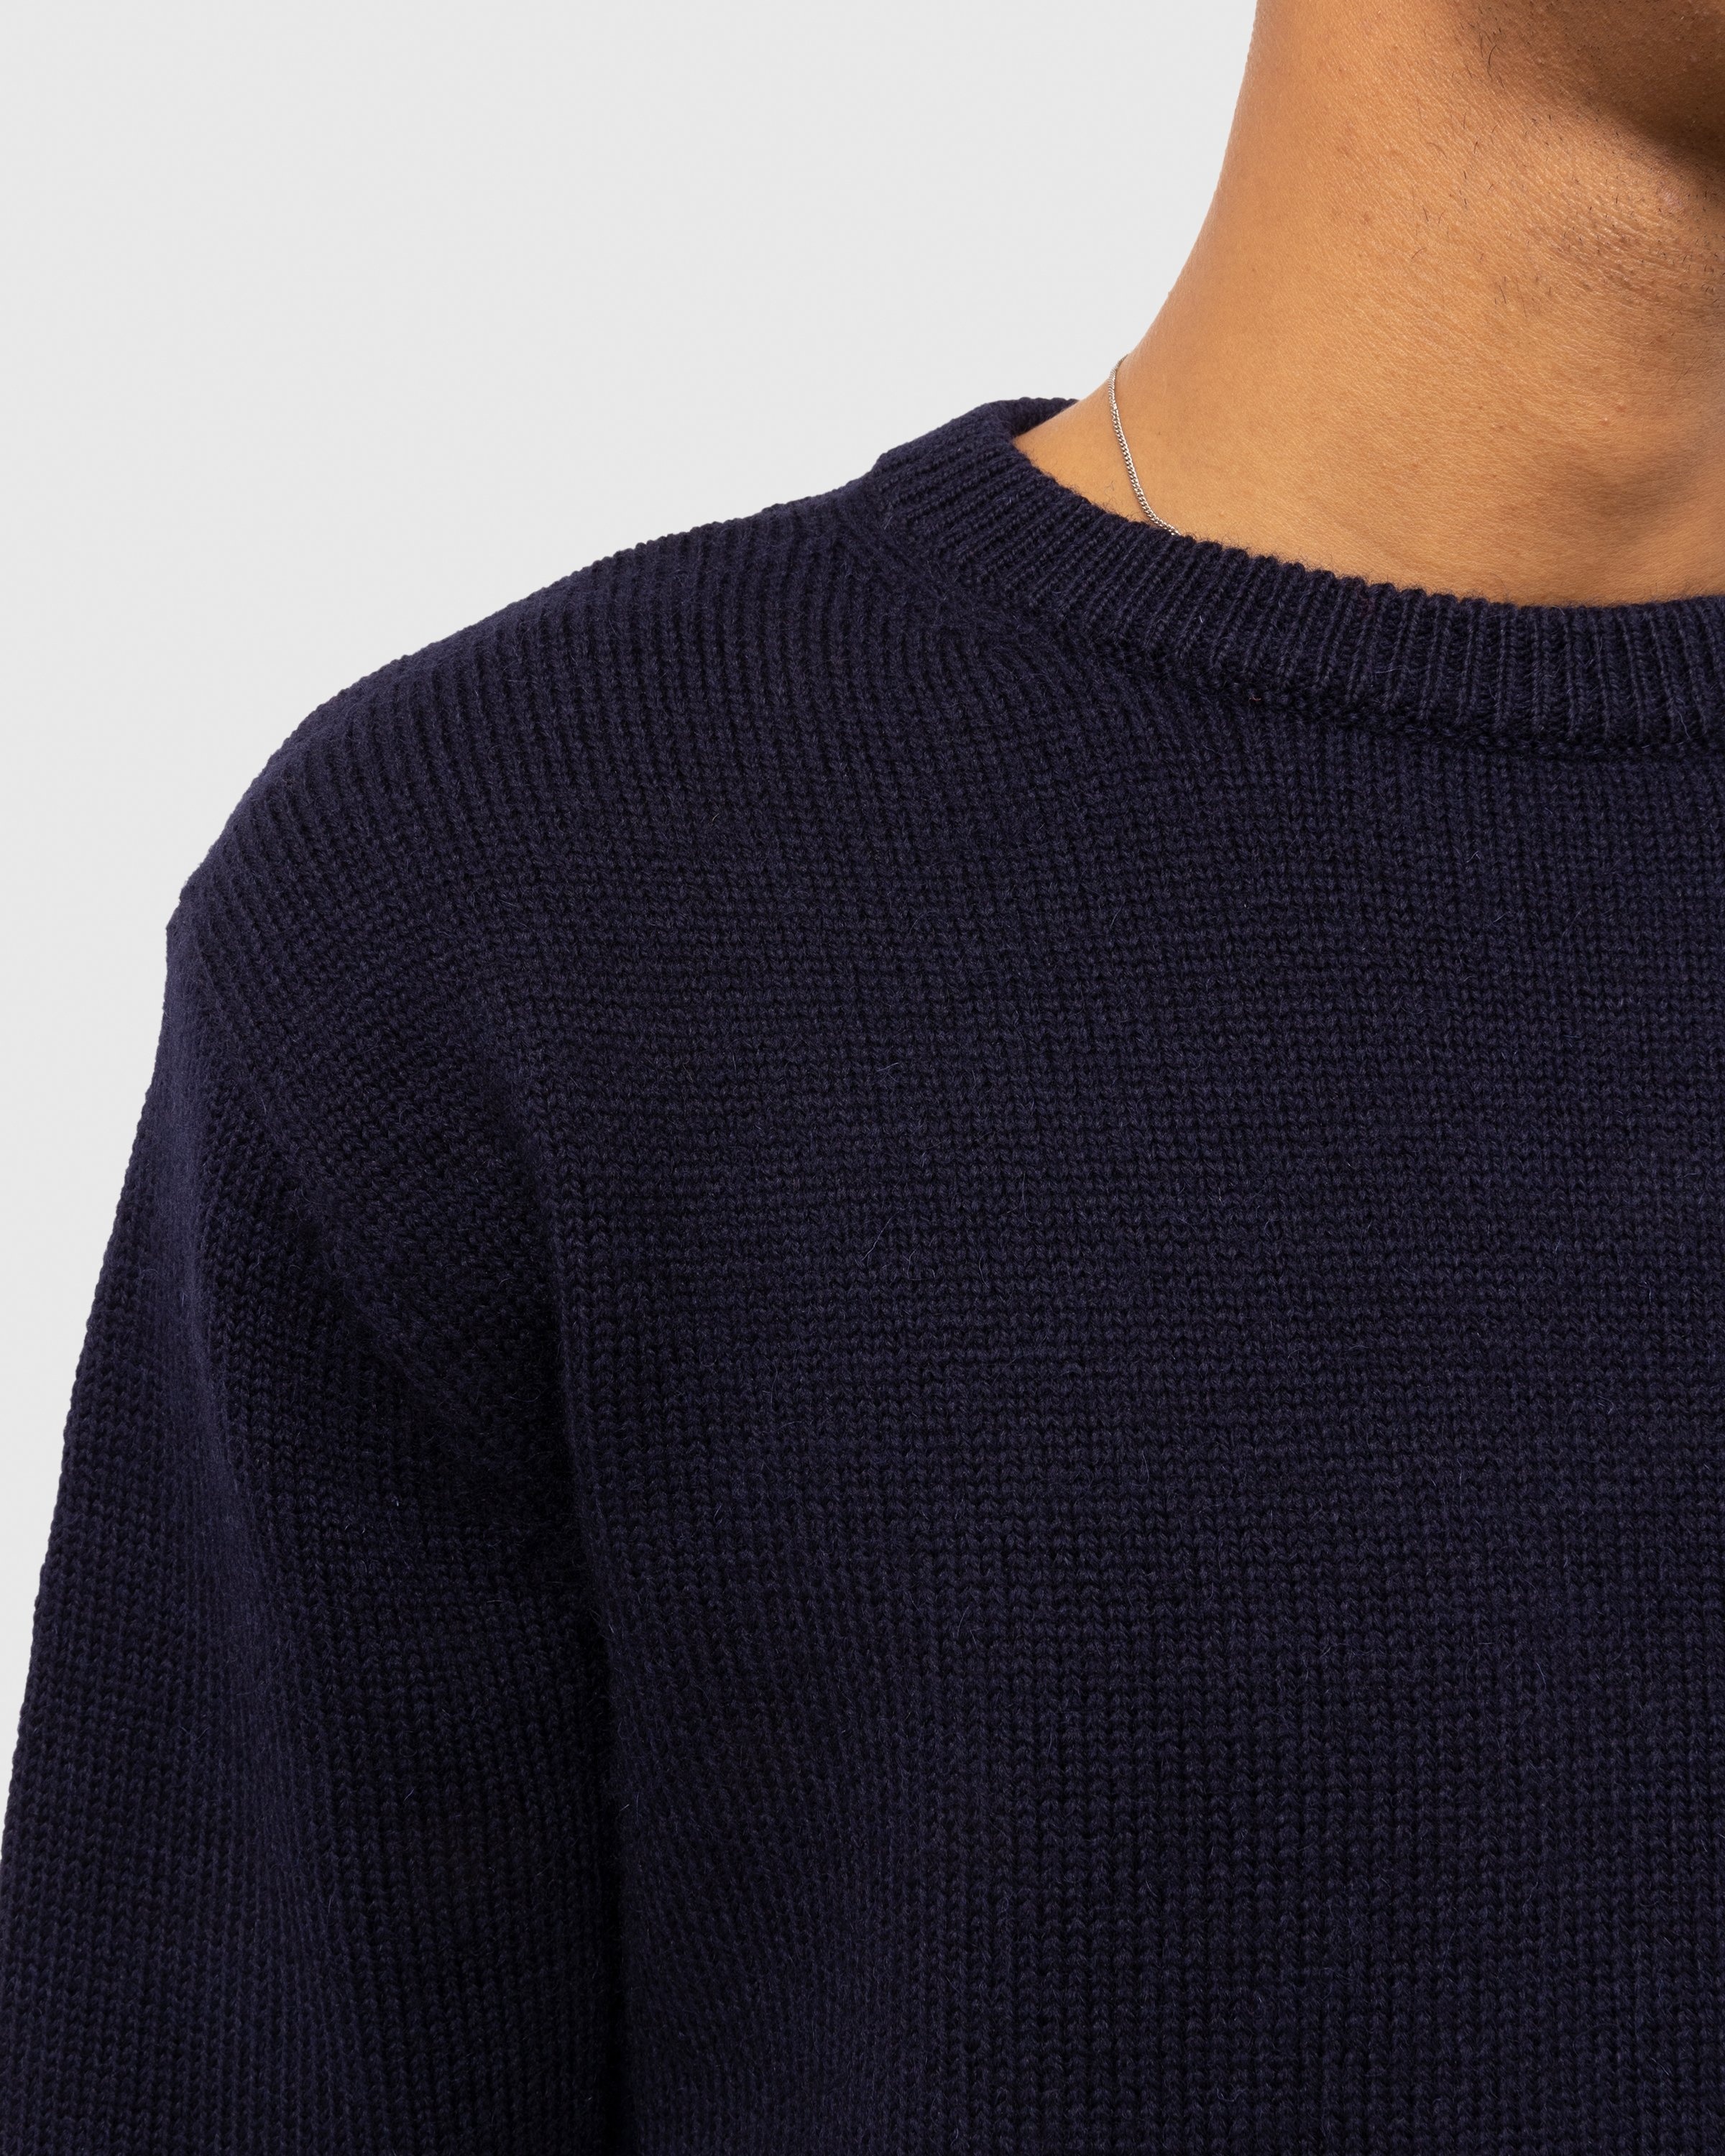 Dries van Noten – Nelson Sweater Blue - Sweatshirts - Blue - Image 3